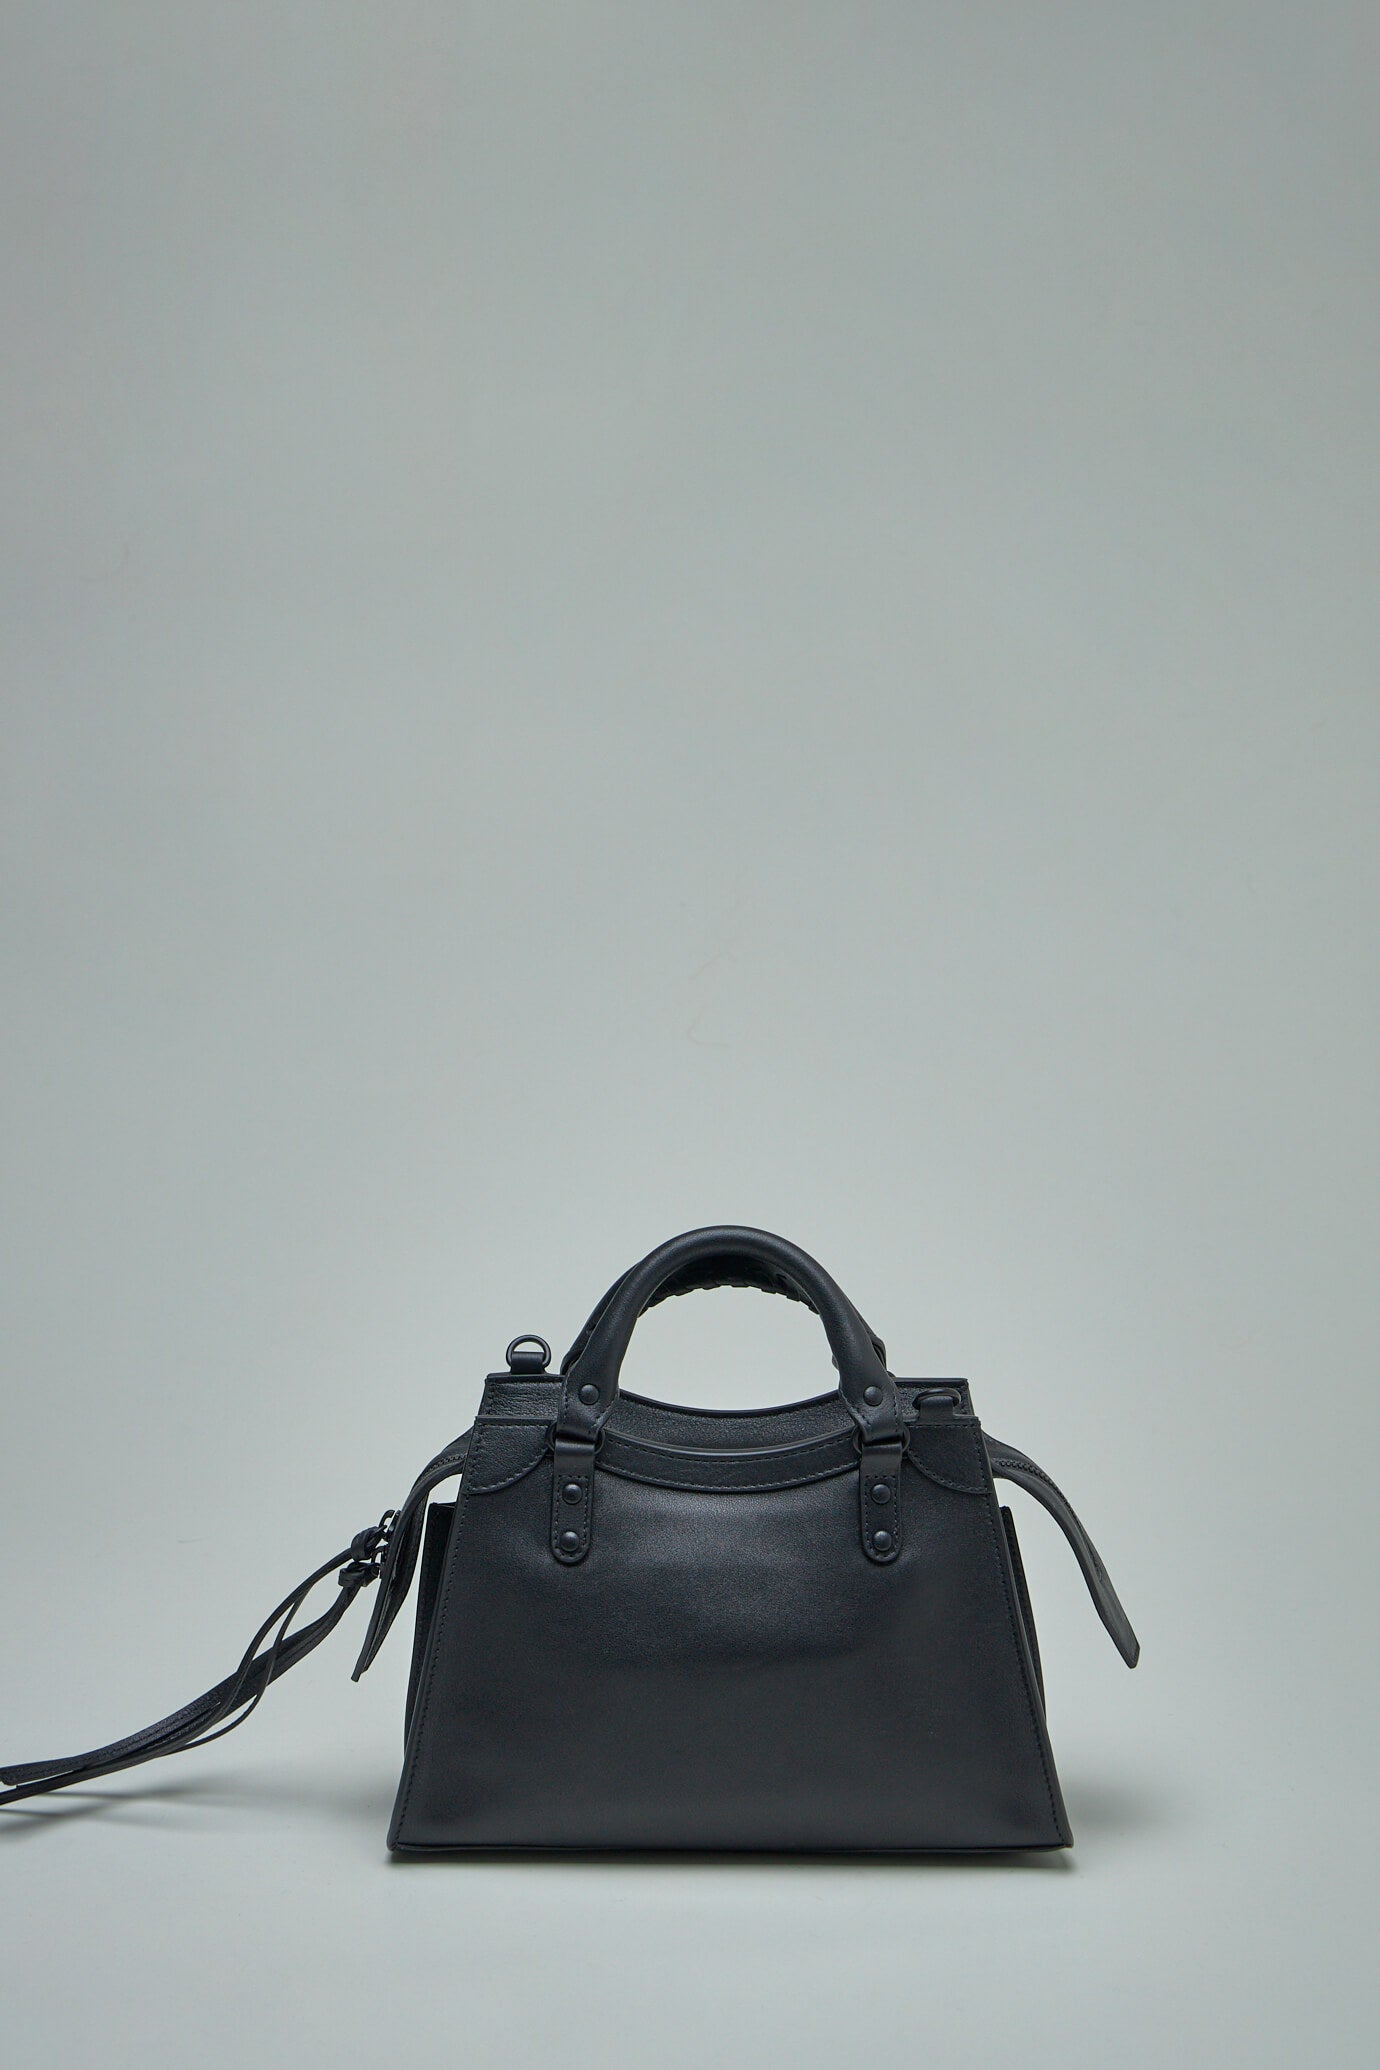 Balenciaga Extra Small Neo Classic City Leather Top Handle Bag Black